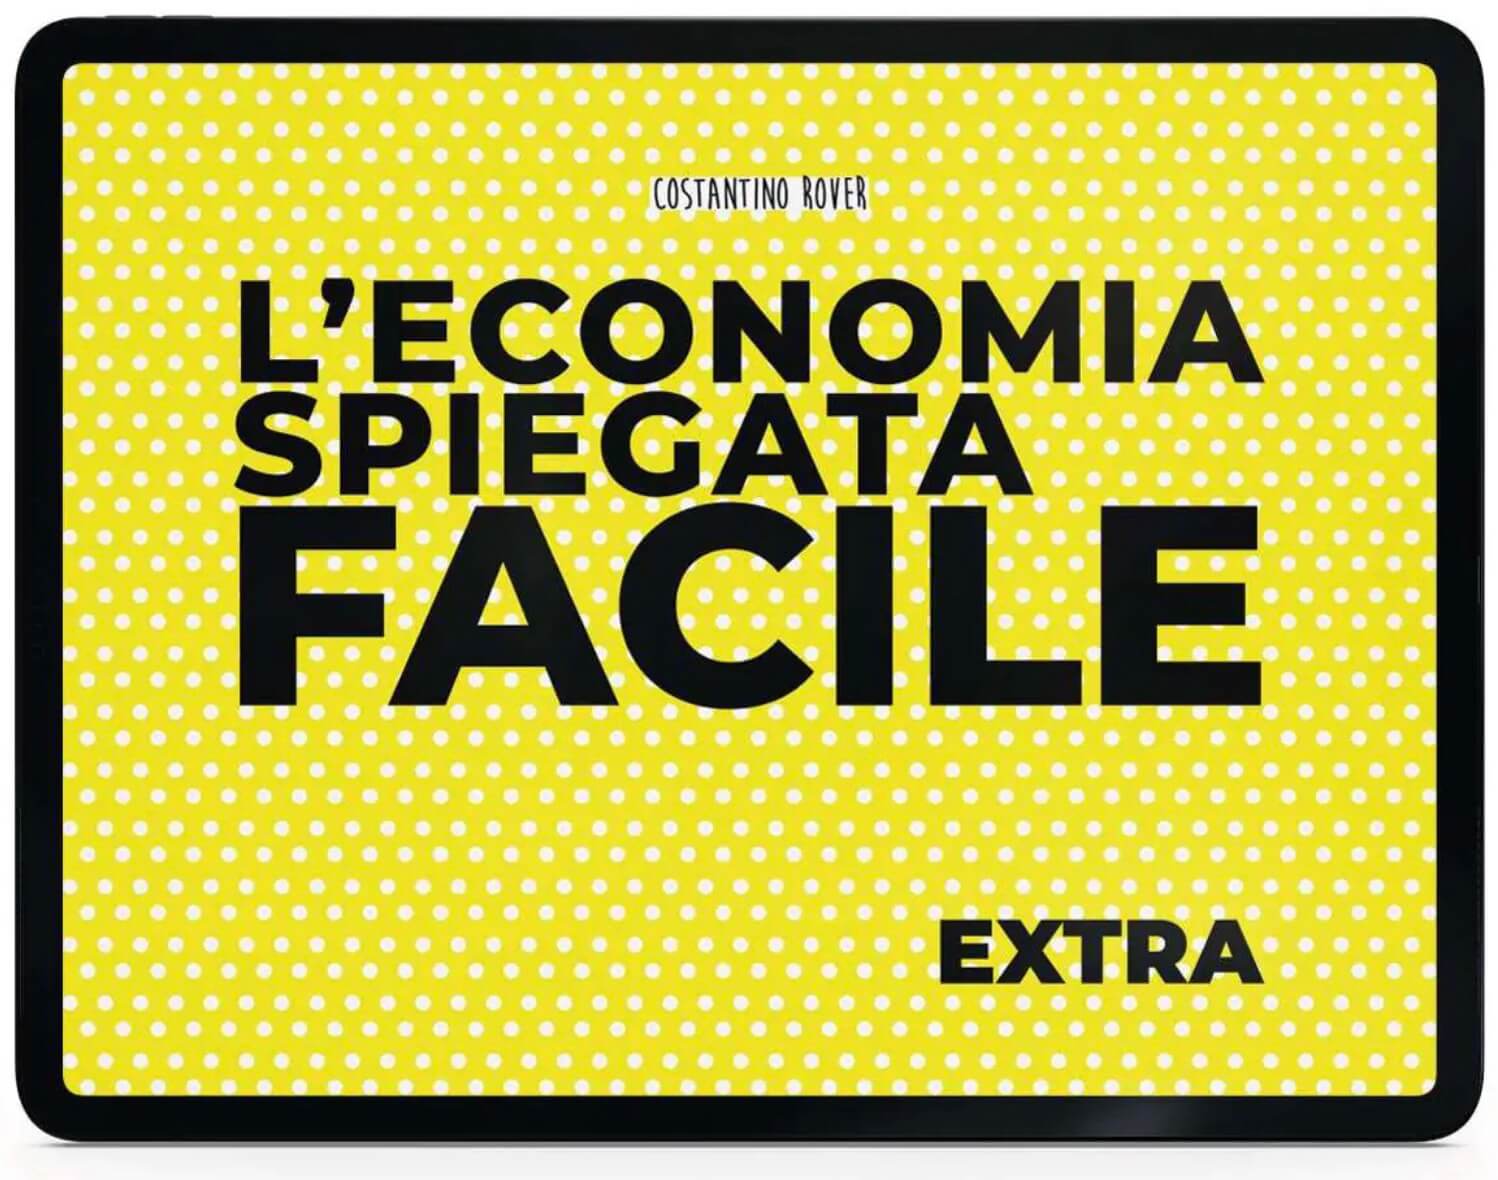 ebook economia spiegata facile EXTRA - e-book